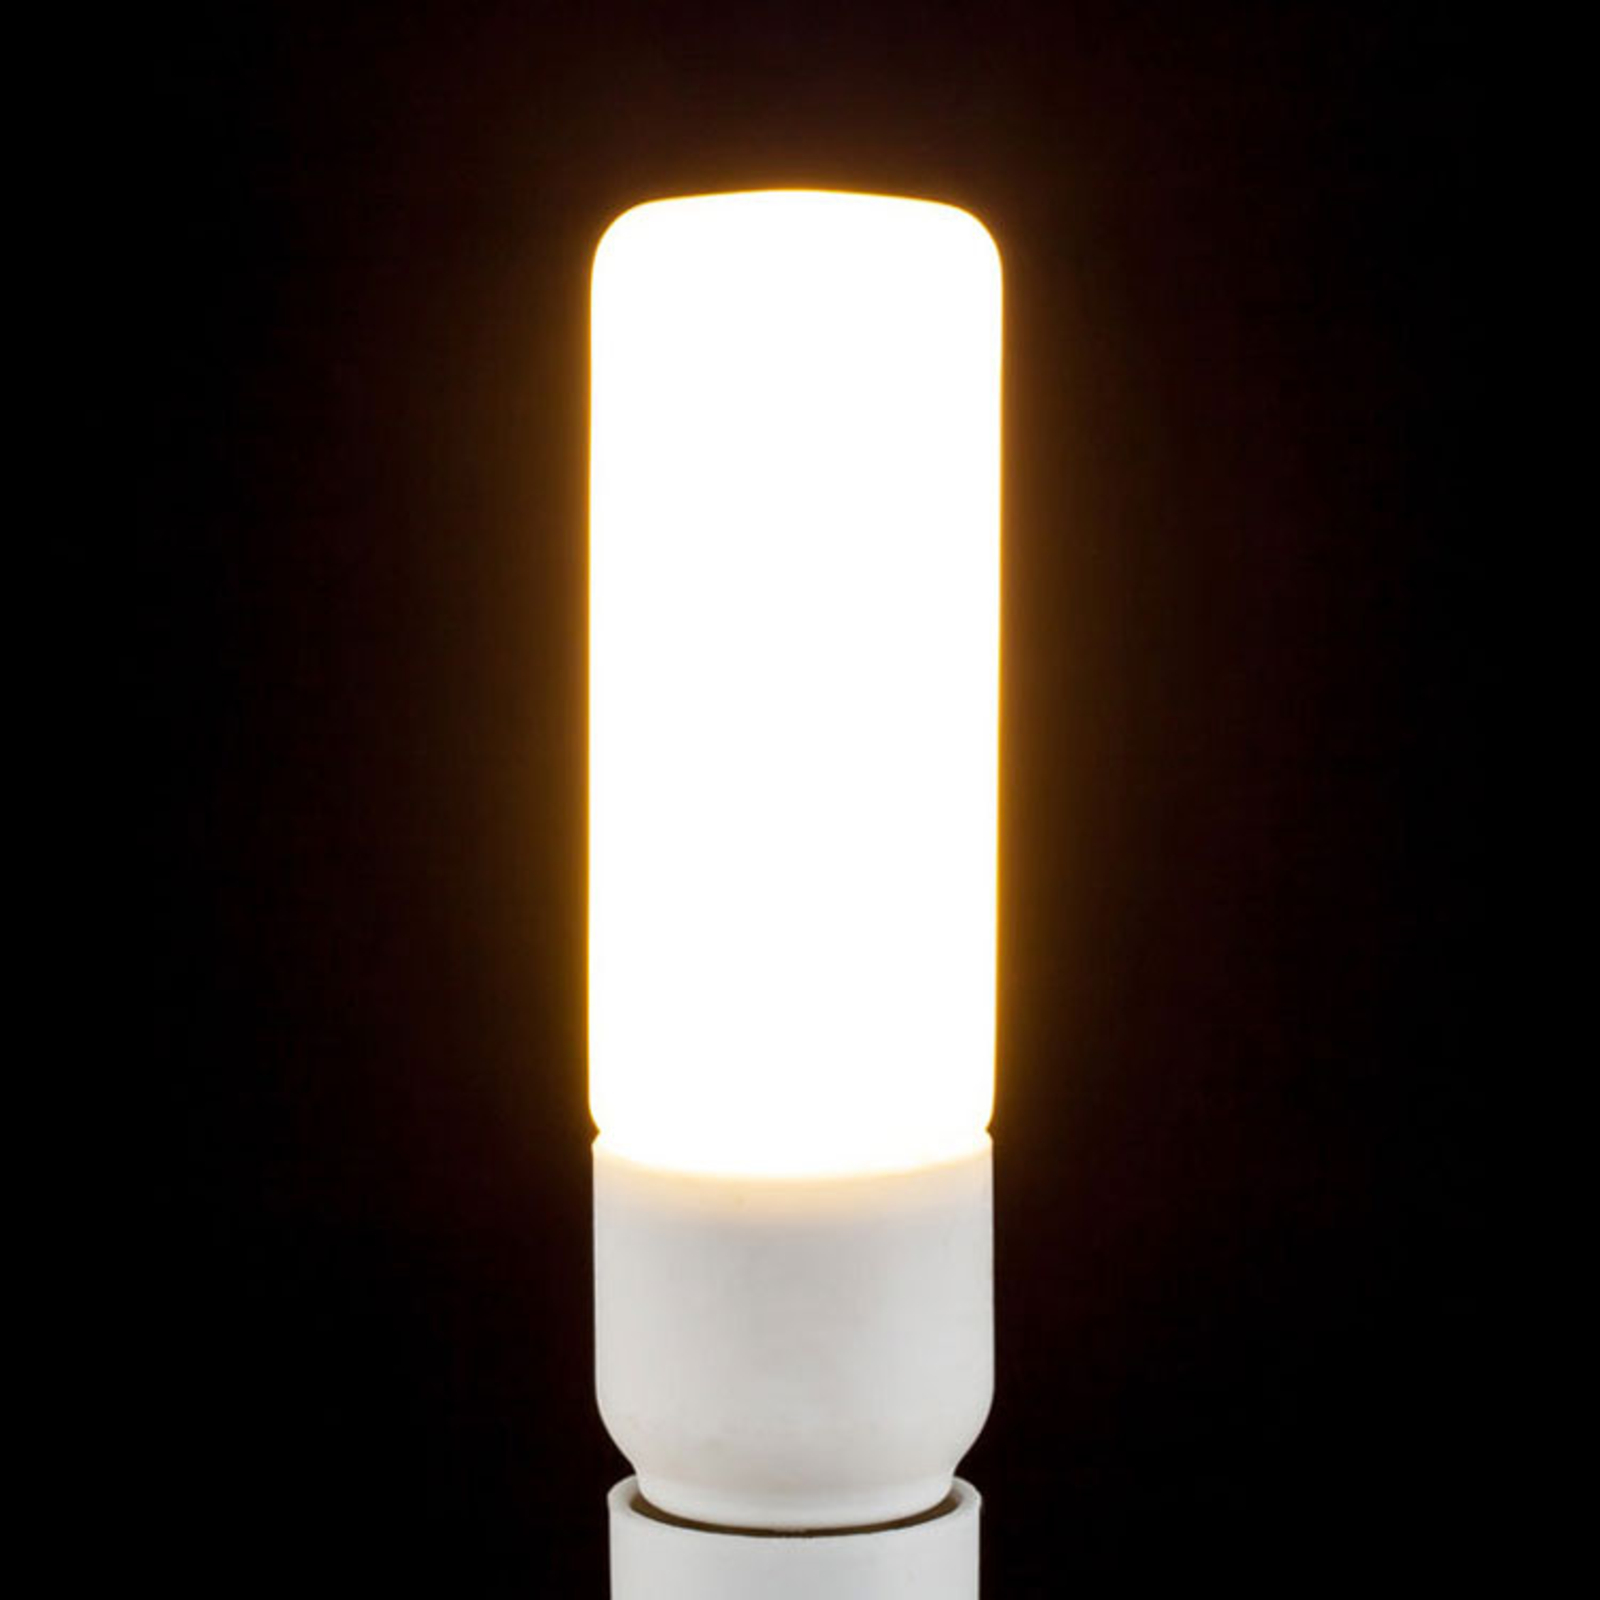 E14 5W LED lamp torukujulises vormis